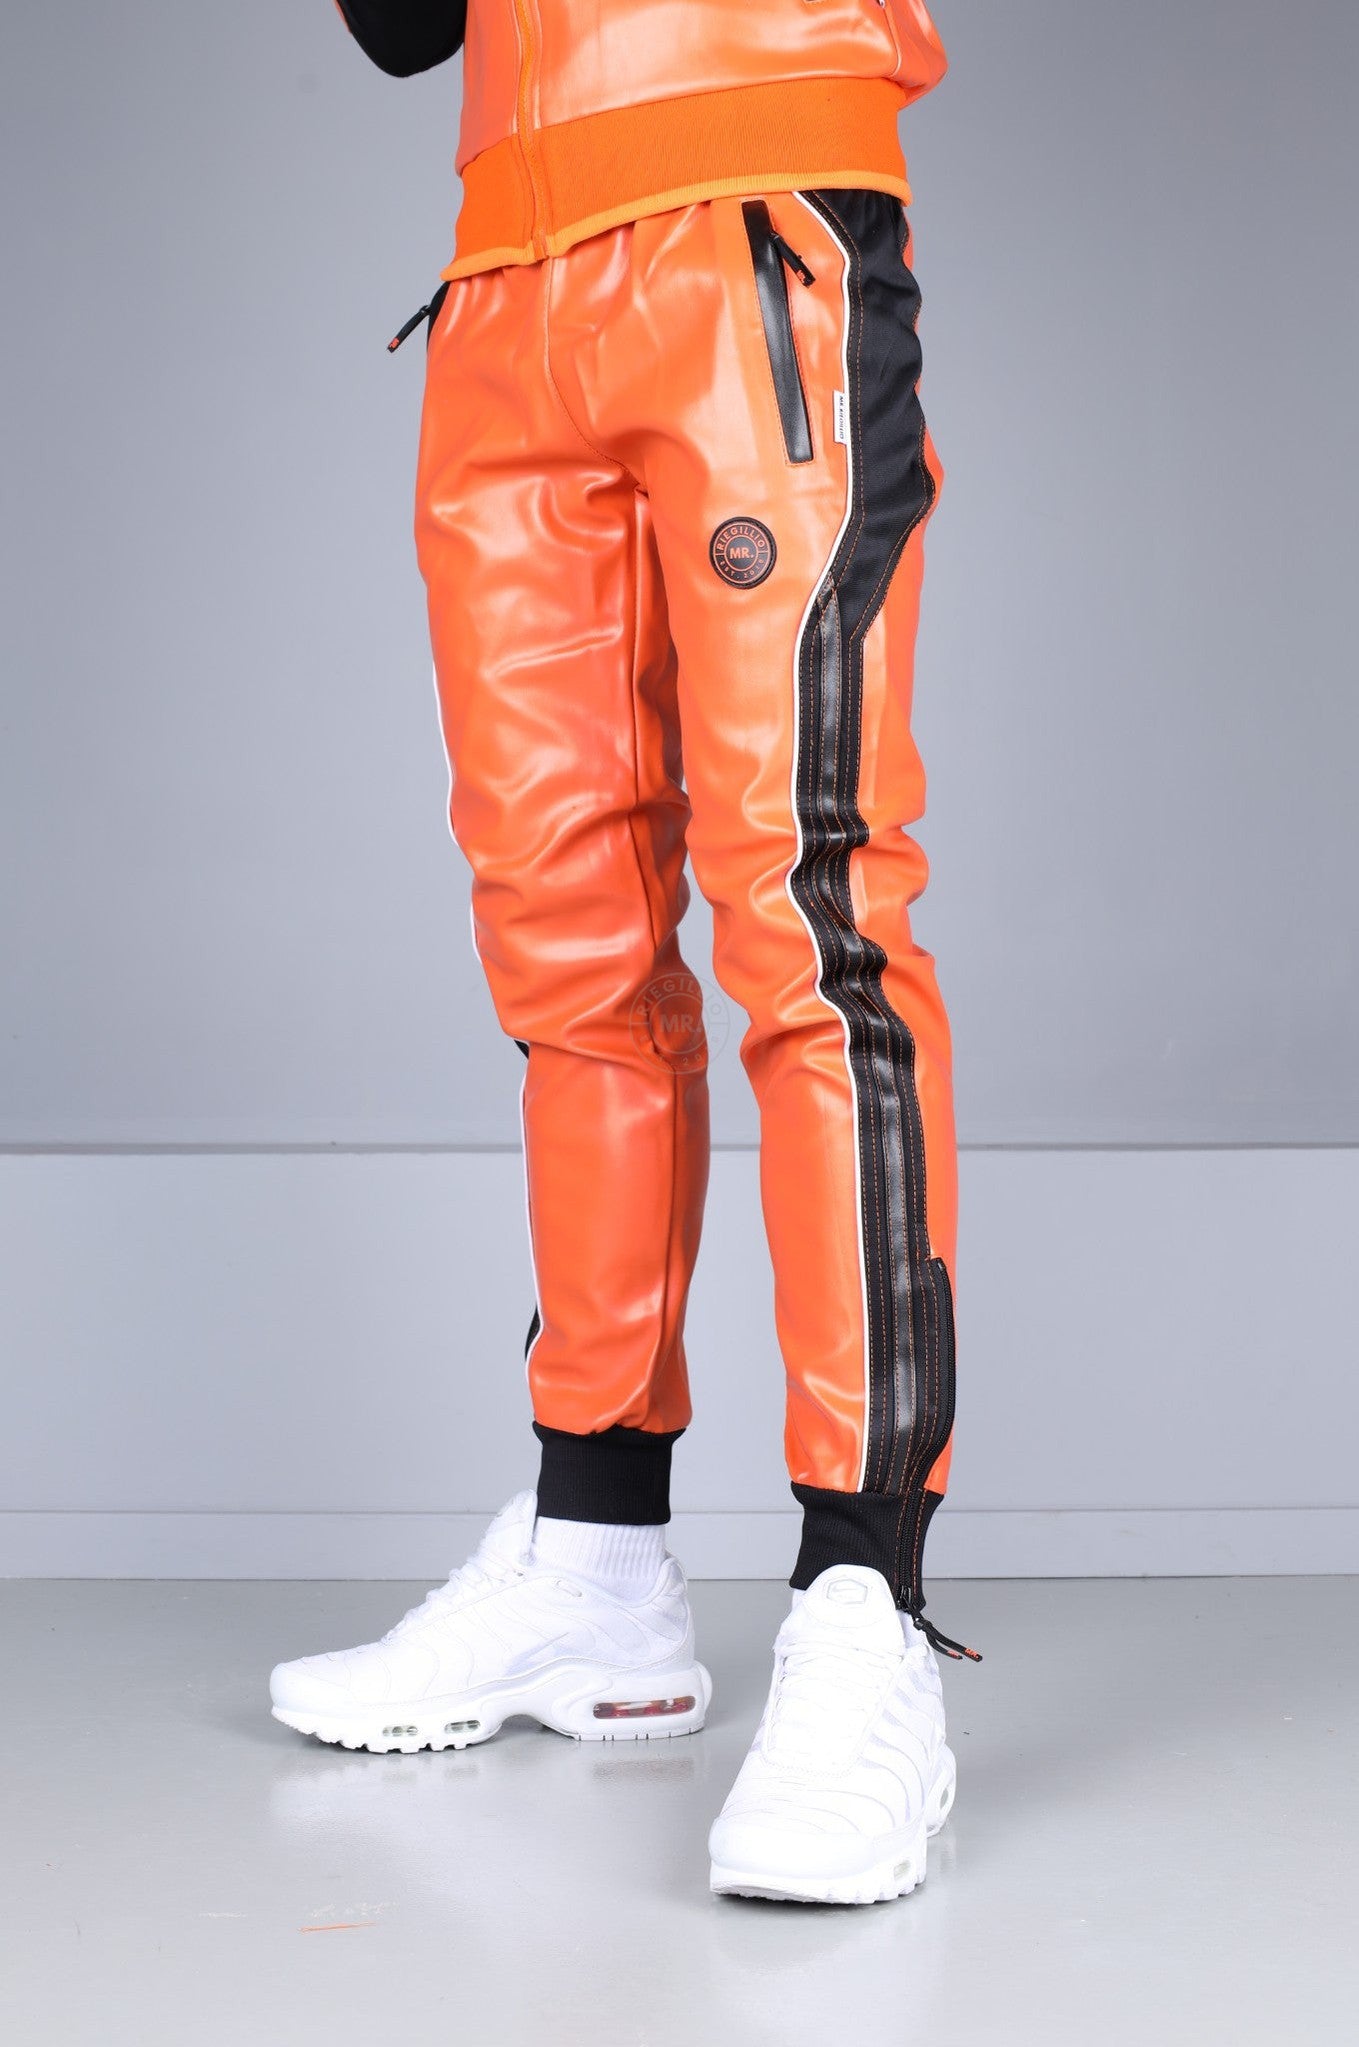 MR. 24 Tracksuit Pants – Orange at MR. Riegillio